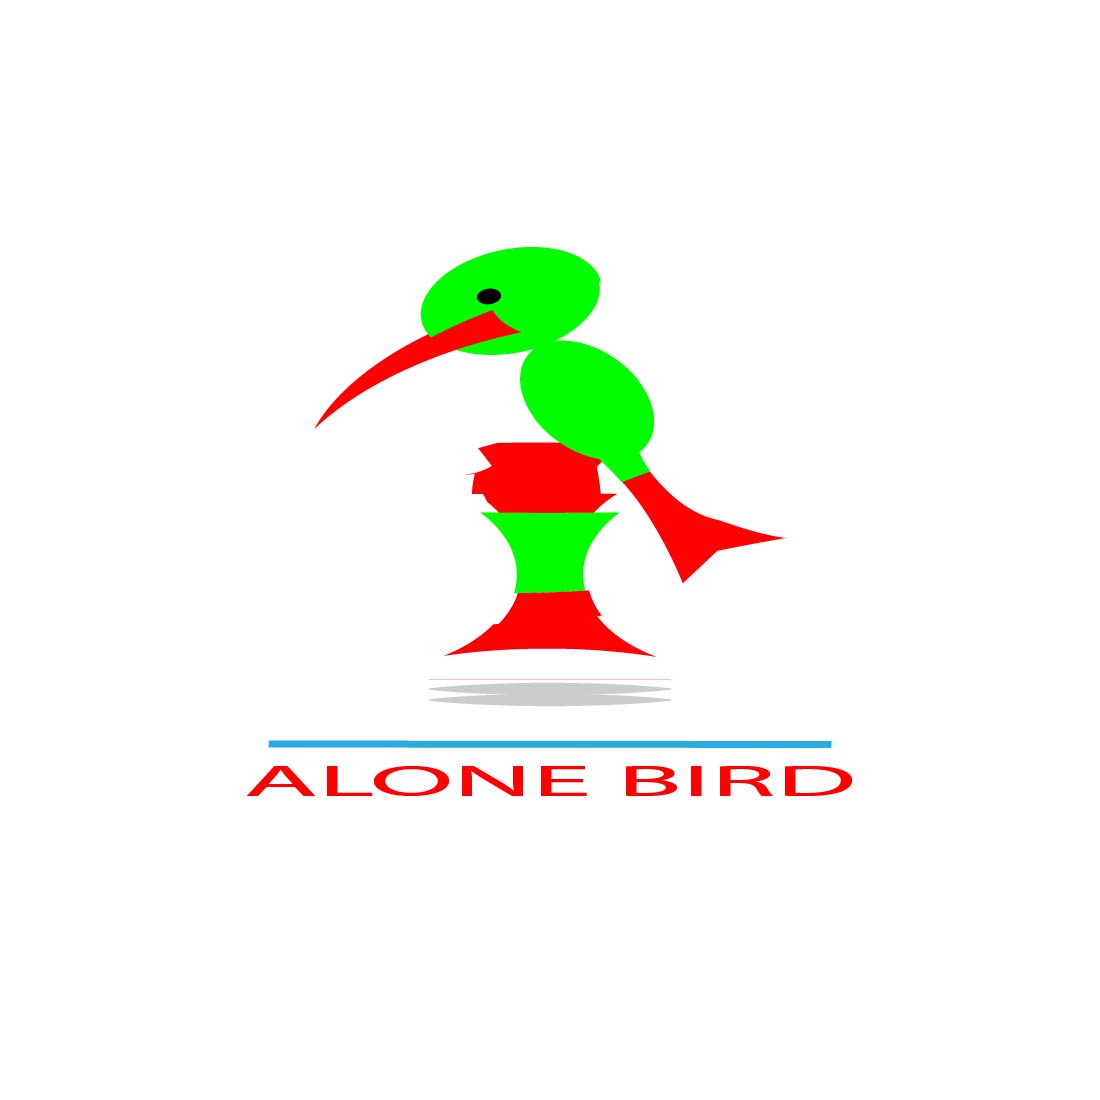 Bird Alone main cover.